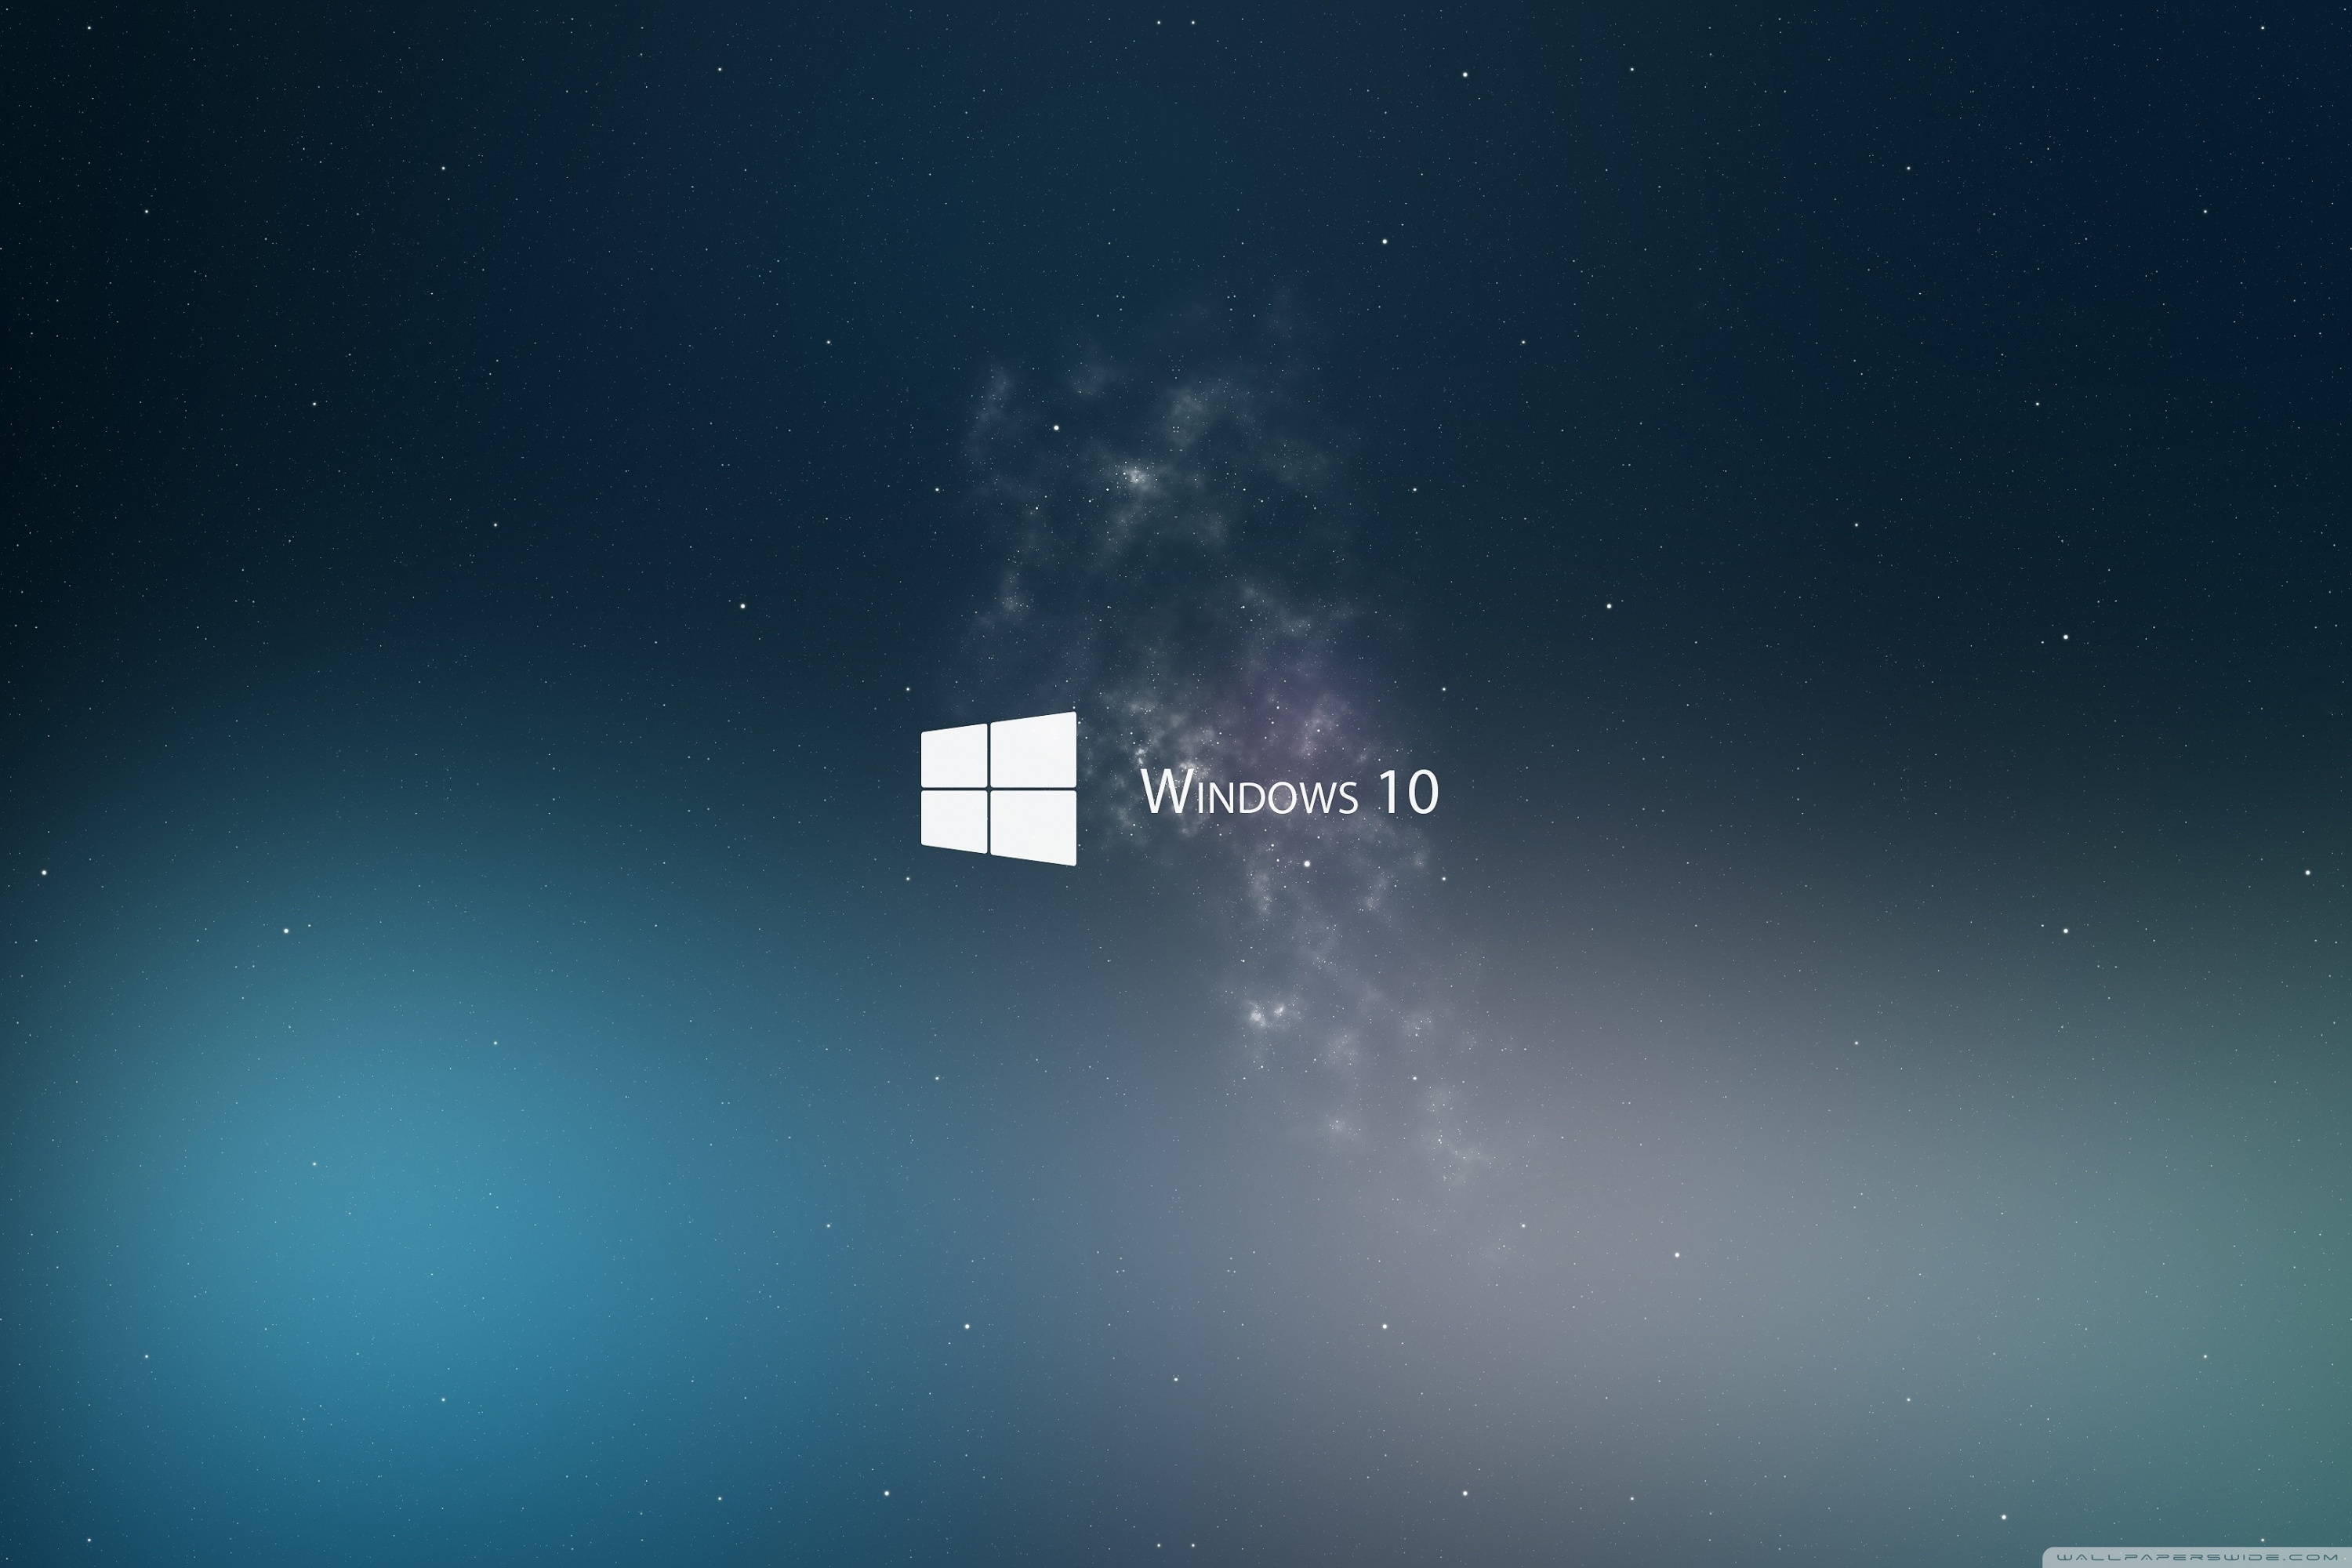 Windows 10 Ultra Hd Desktop Background Wallpaper For Widescreen Ultrawide Desktop Laptop Multi Display Dual Monitor Tablet Smartphone